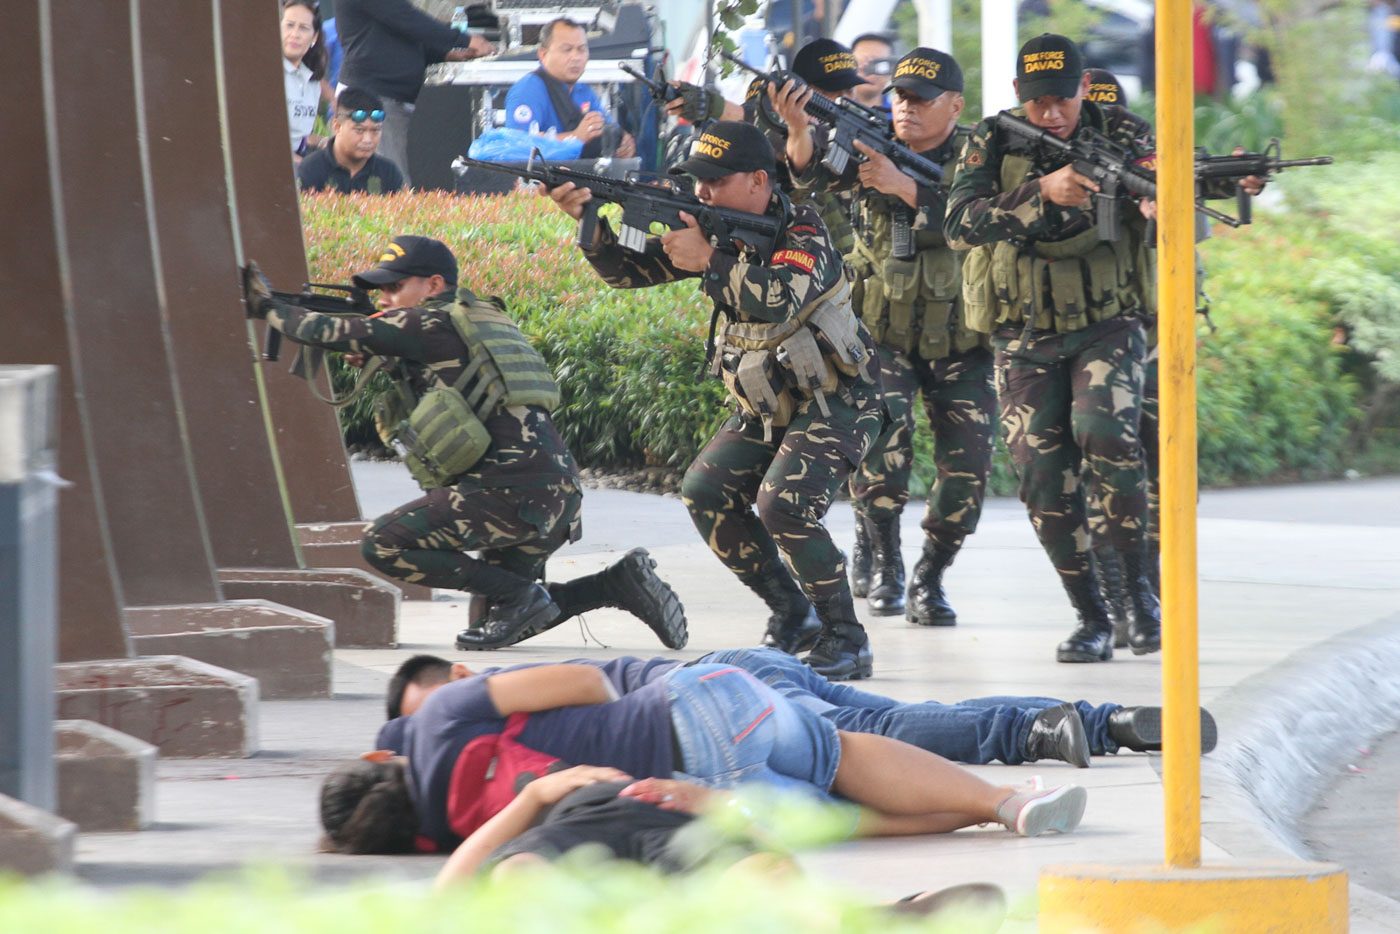 IN PHOTOS: Davao City responds to ‘terror attack’ in pilot drill